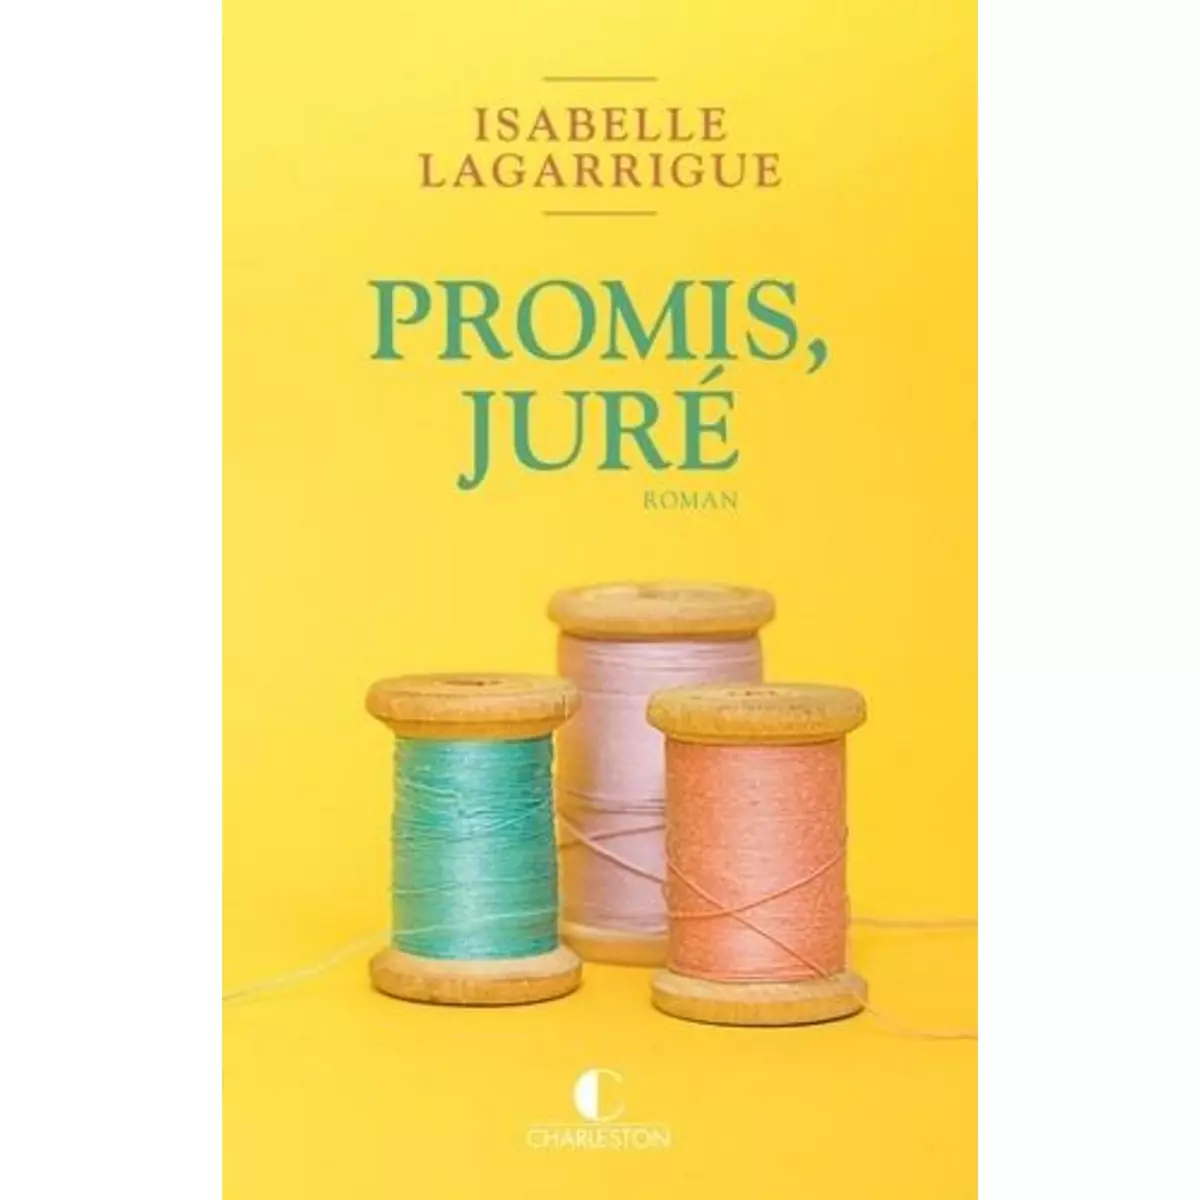  PROMIS, JURE, Lagarrigue Isabelle